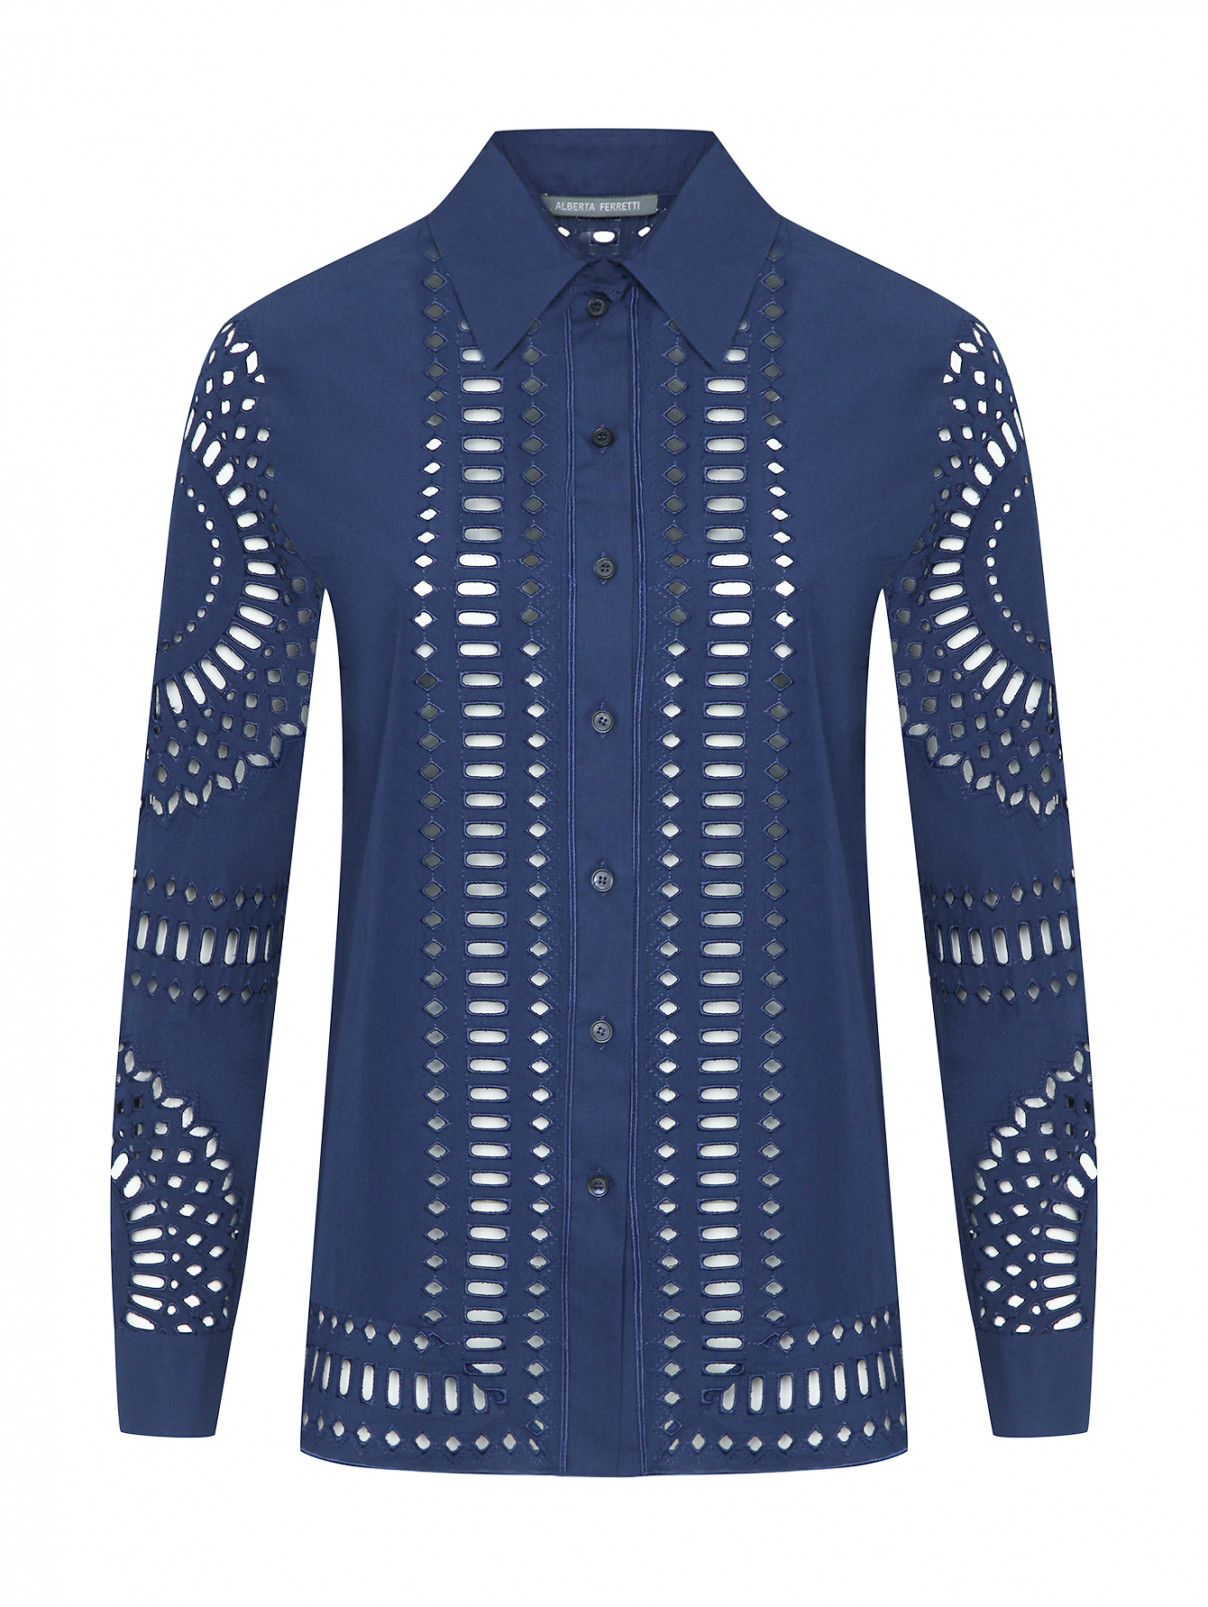 Ажурная блуза из хлопка Alberta Ferretti  –  Общий вид  – Цвет:  Синий